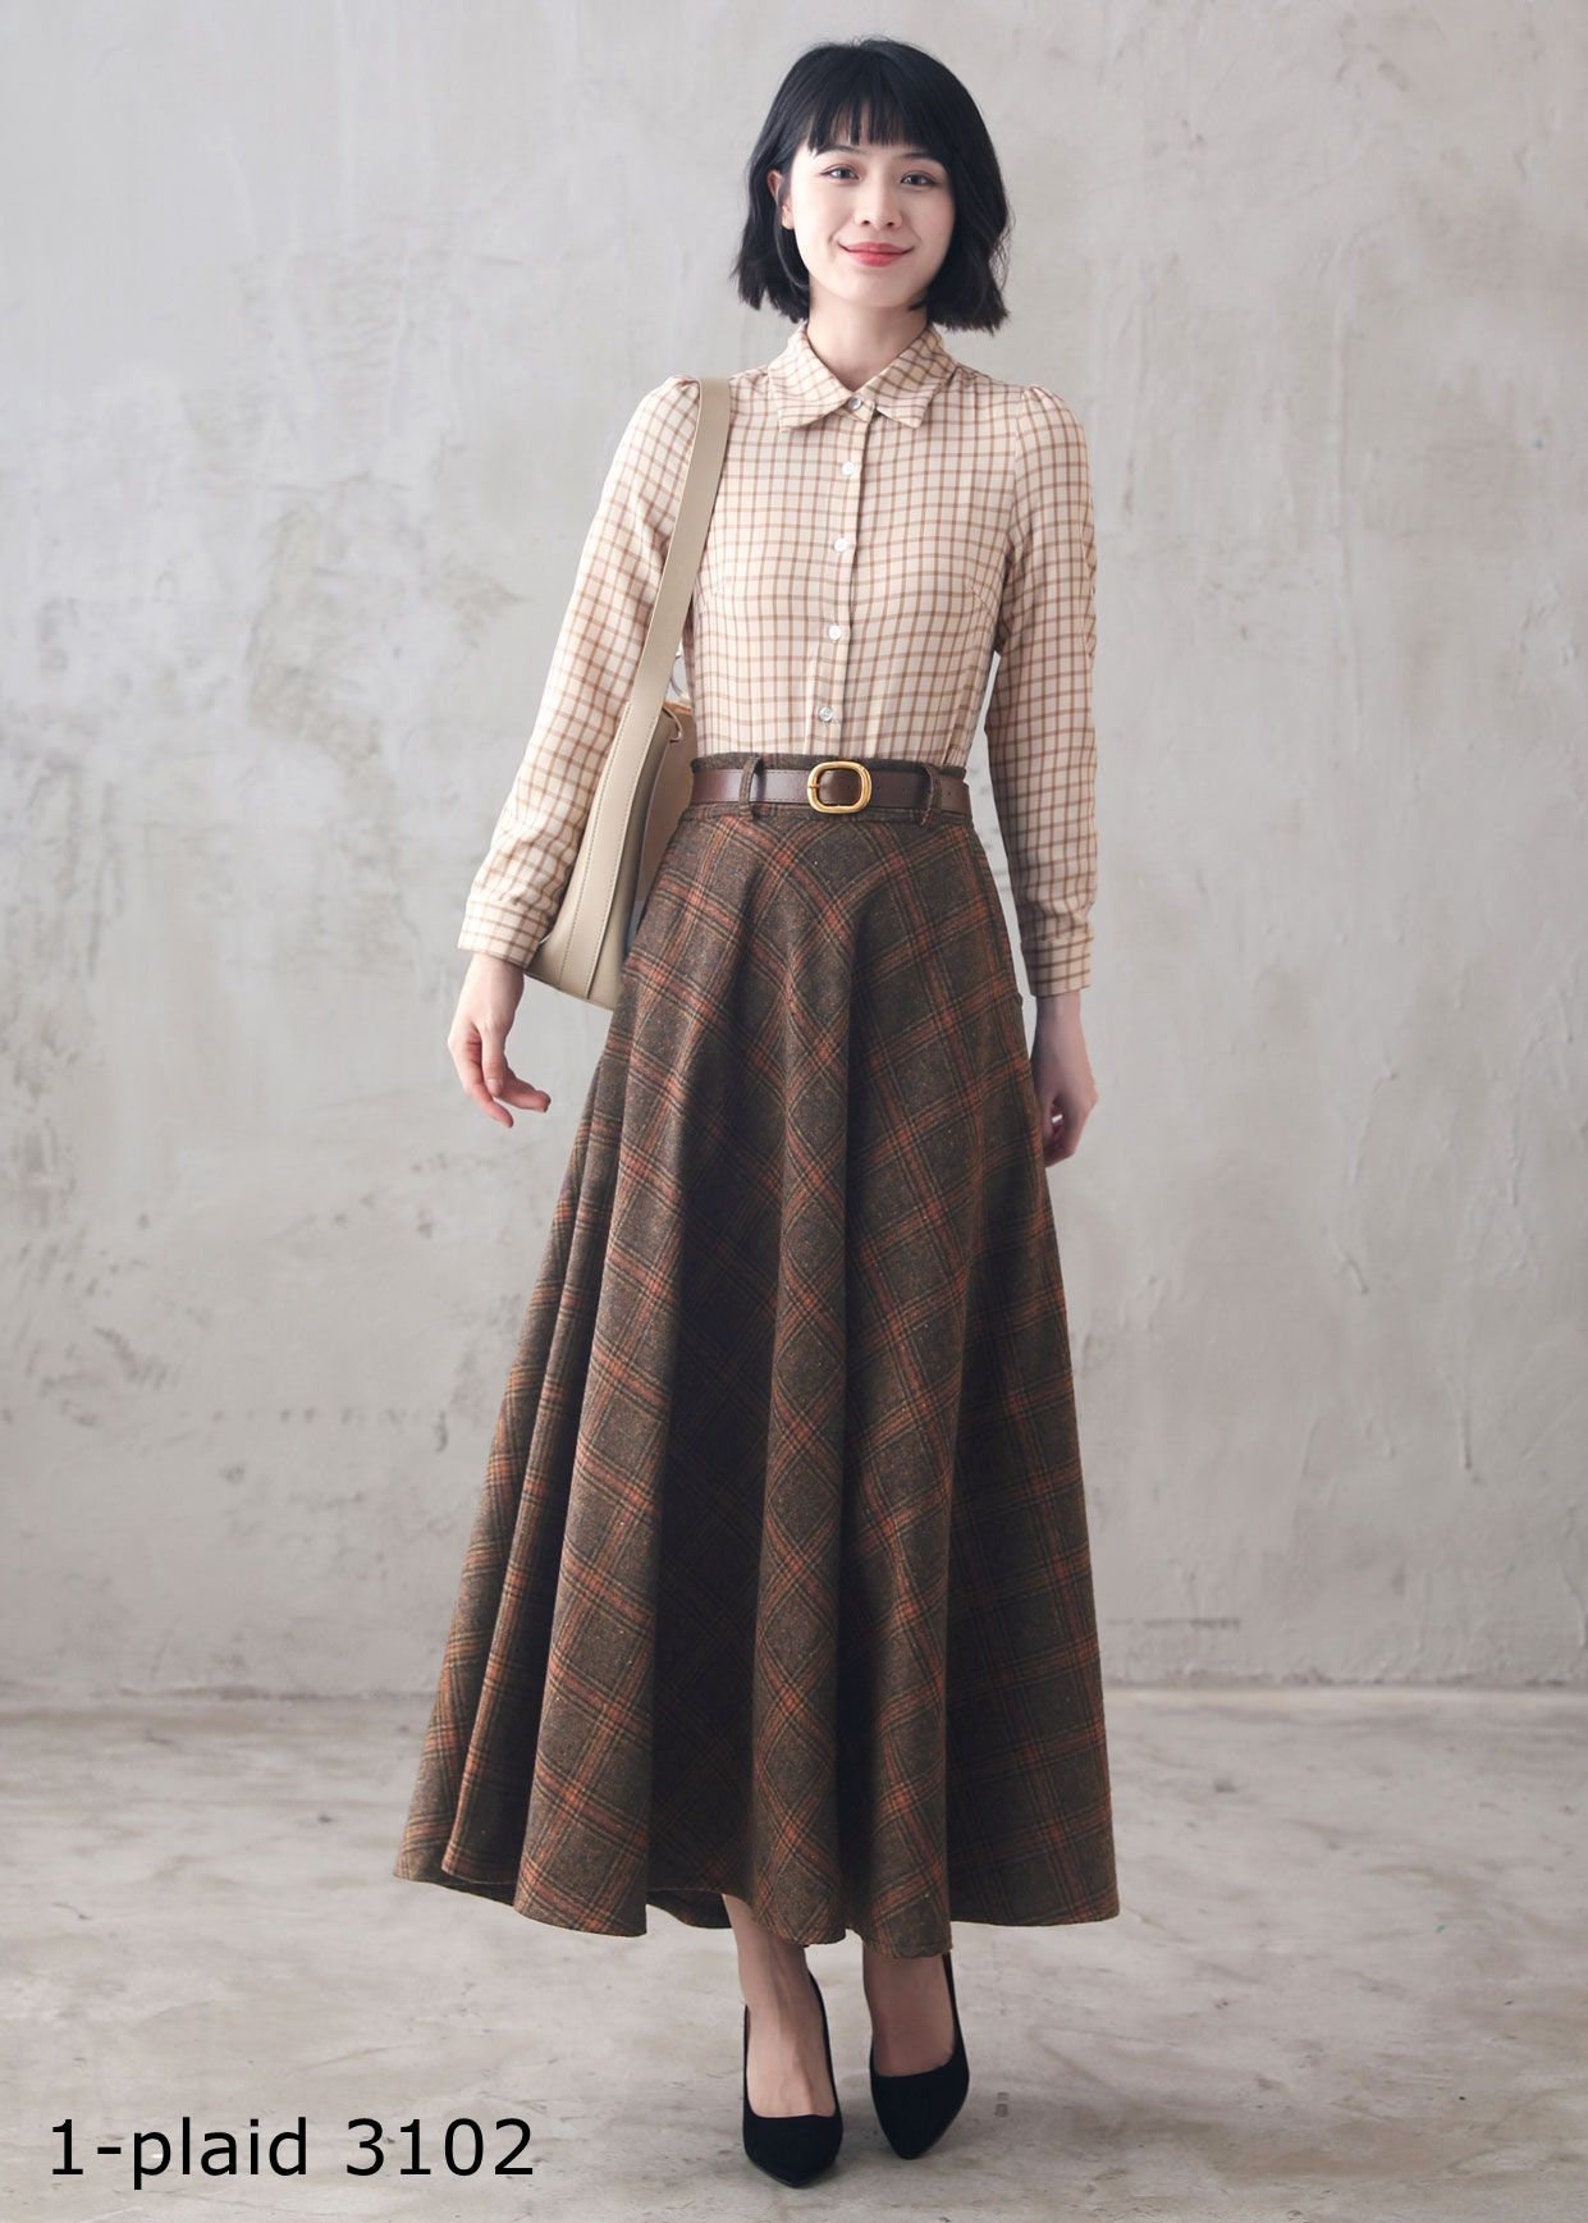 Wool Skirt Long Wool Plaid Skirt Tartan Wool Maxi Skirt - Etsy